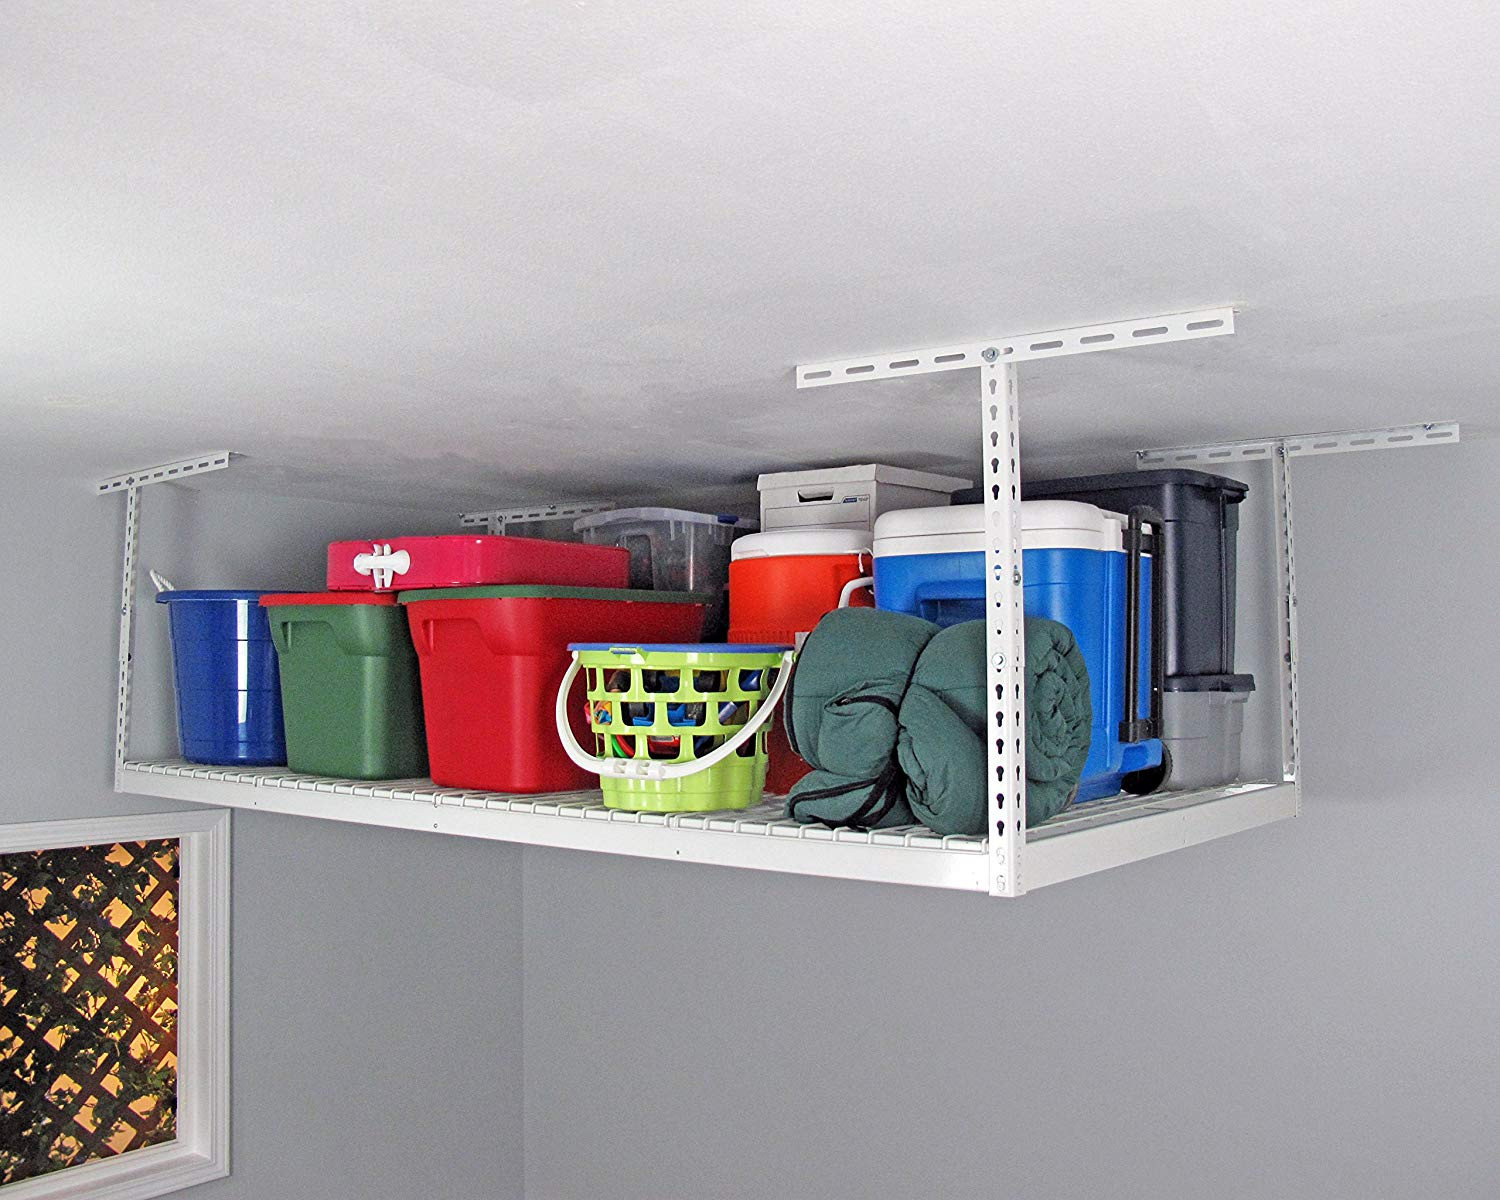 Best ideas about Garage Storage Racks
. Save or Pin Best Ceiling Mounted Garage Storage Racks Reviews Now.